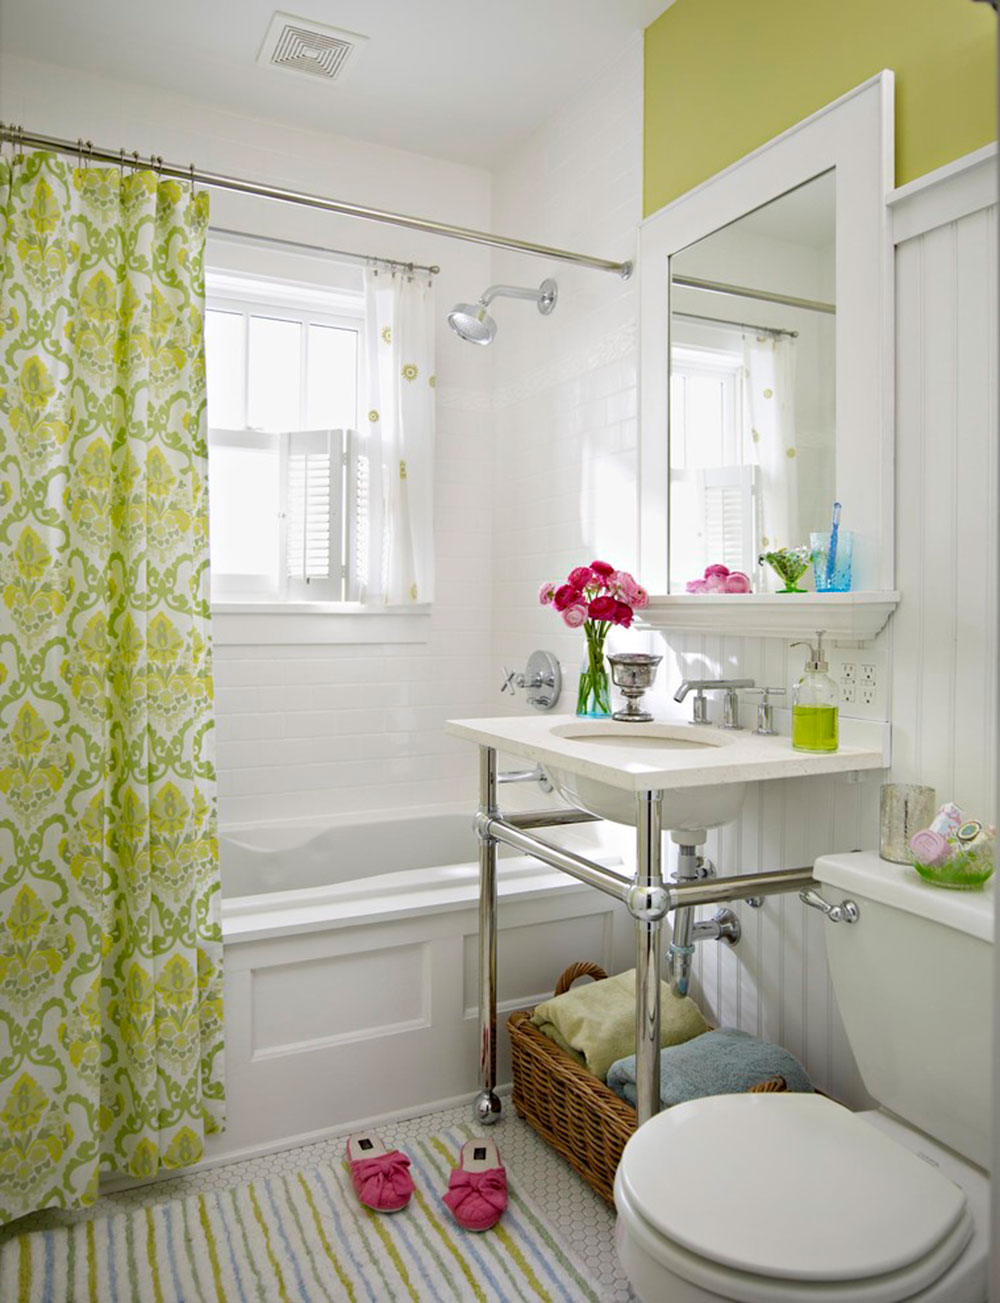 Trendy Shower Curtains For Your Bathrooms, Apartment Bathroom Ideas Shower Curtain